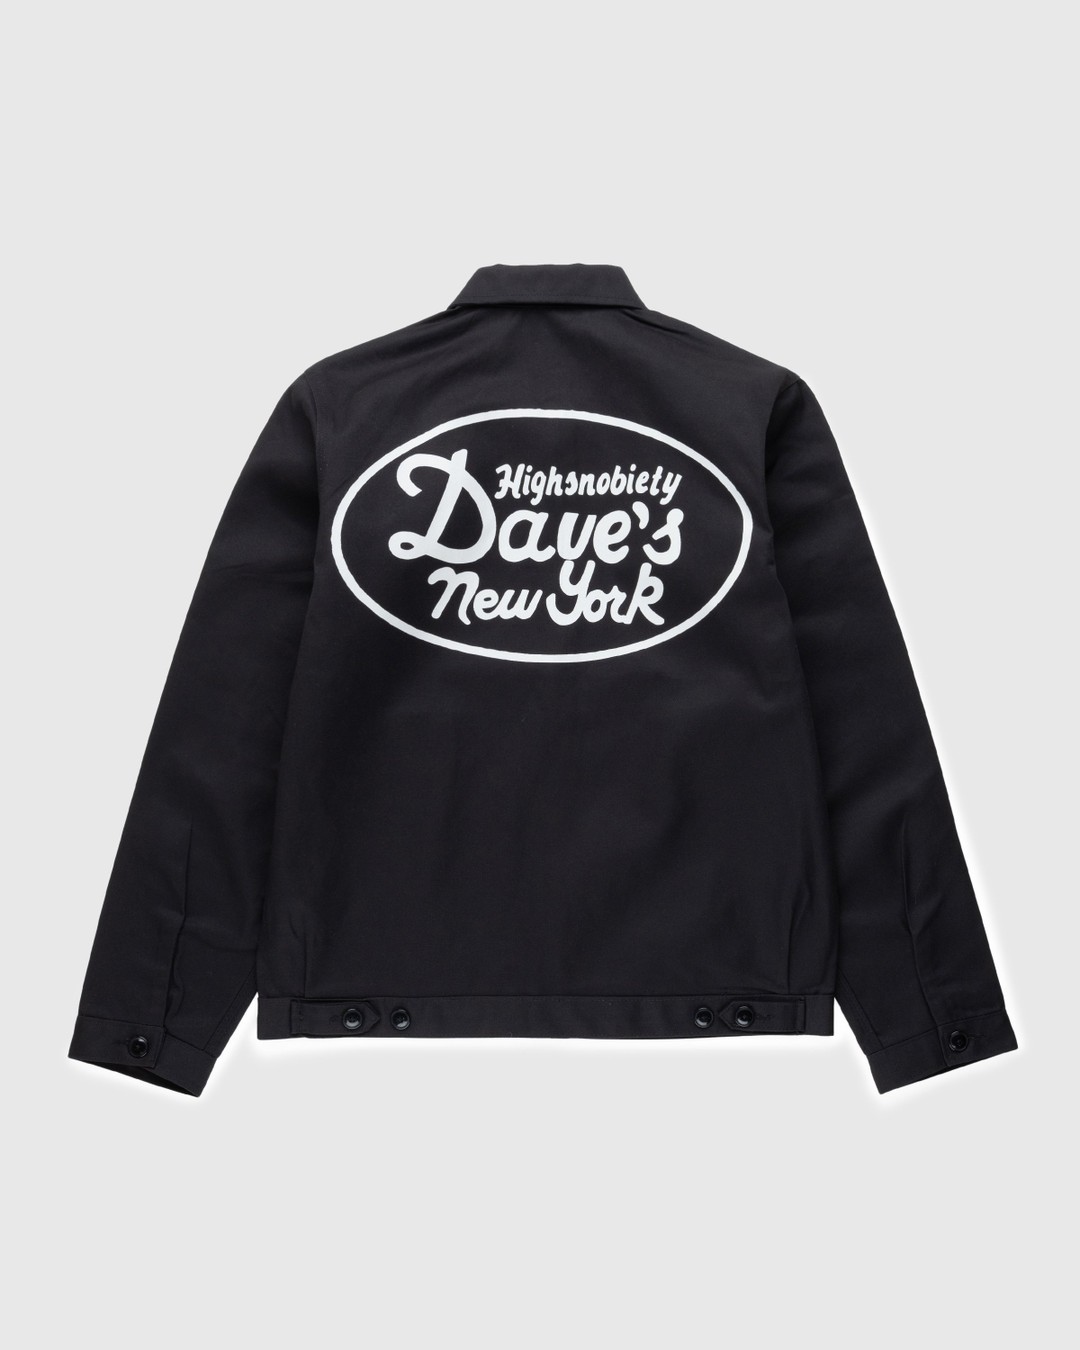 Dave's New York x Highsnobiety – Dickies Eisenhower Jacket Black - Outerwear - Black - Image 1